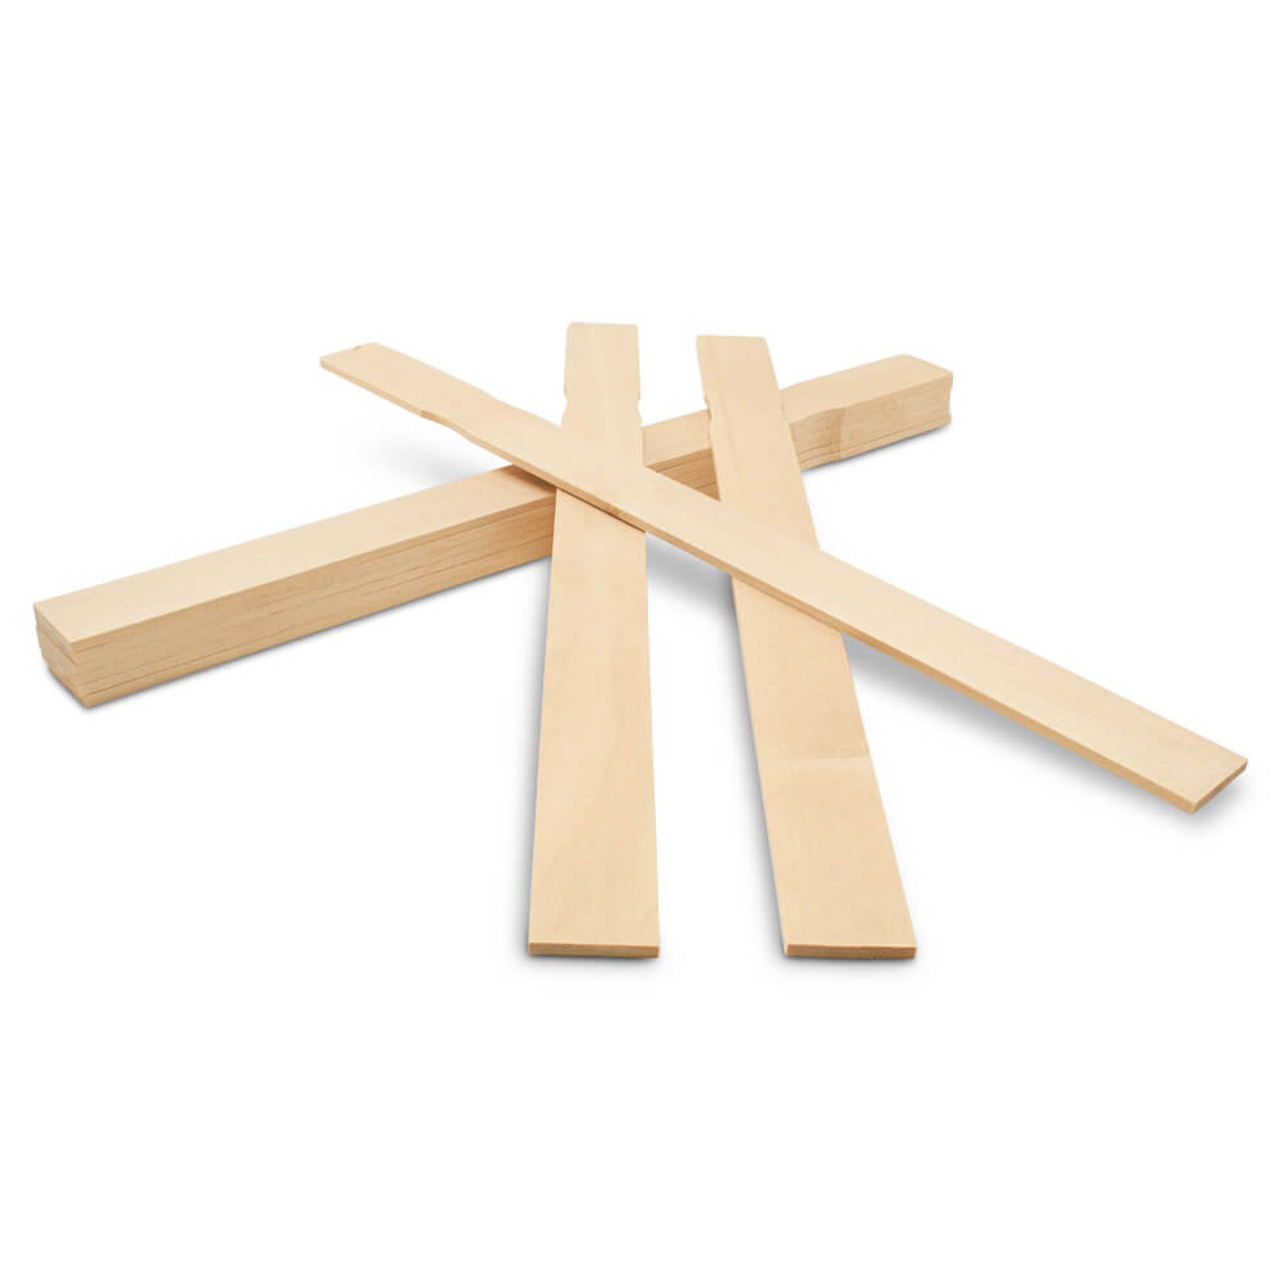 200 Pcs 14 inch Length Paint Sticks, KINJOEK Premium Wood Multi-Purpose Wood Cra - New